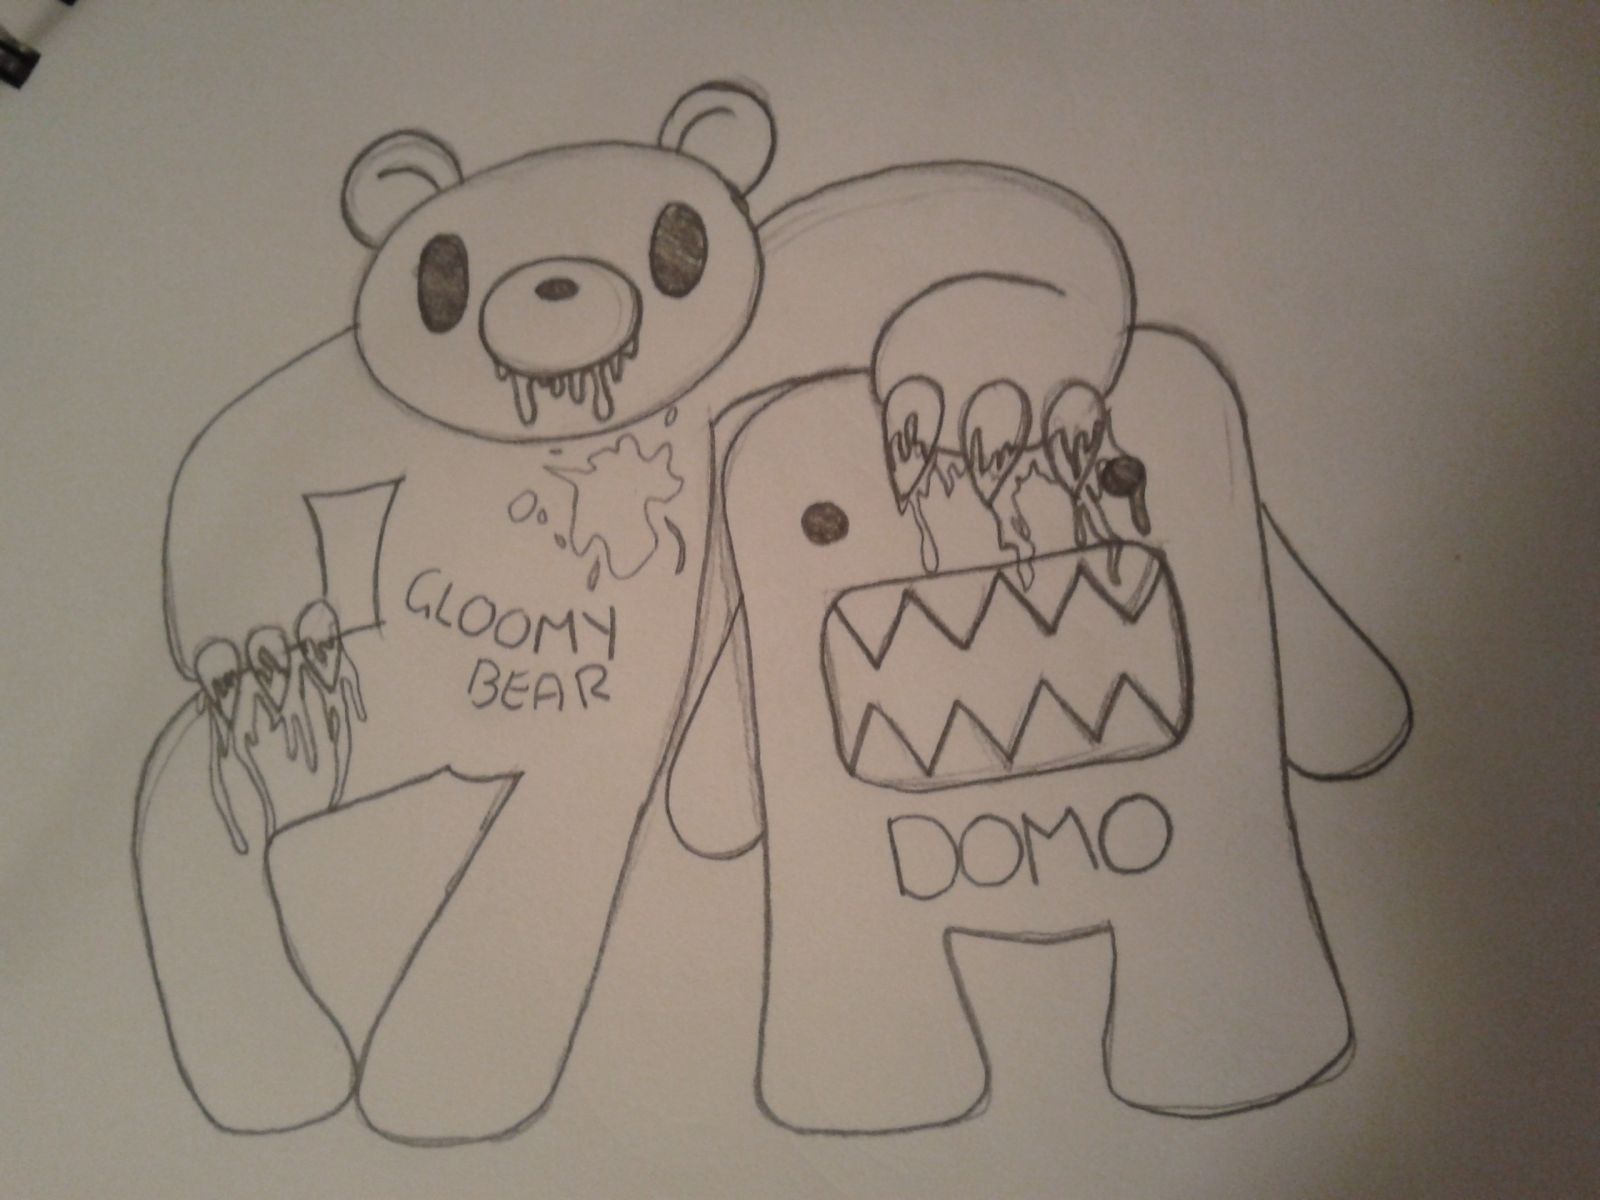 domo gloomy bear tatt design